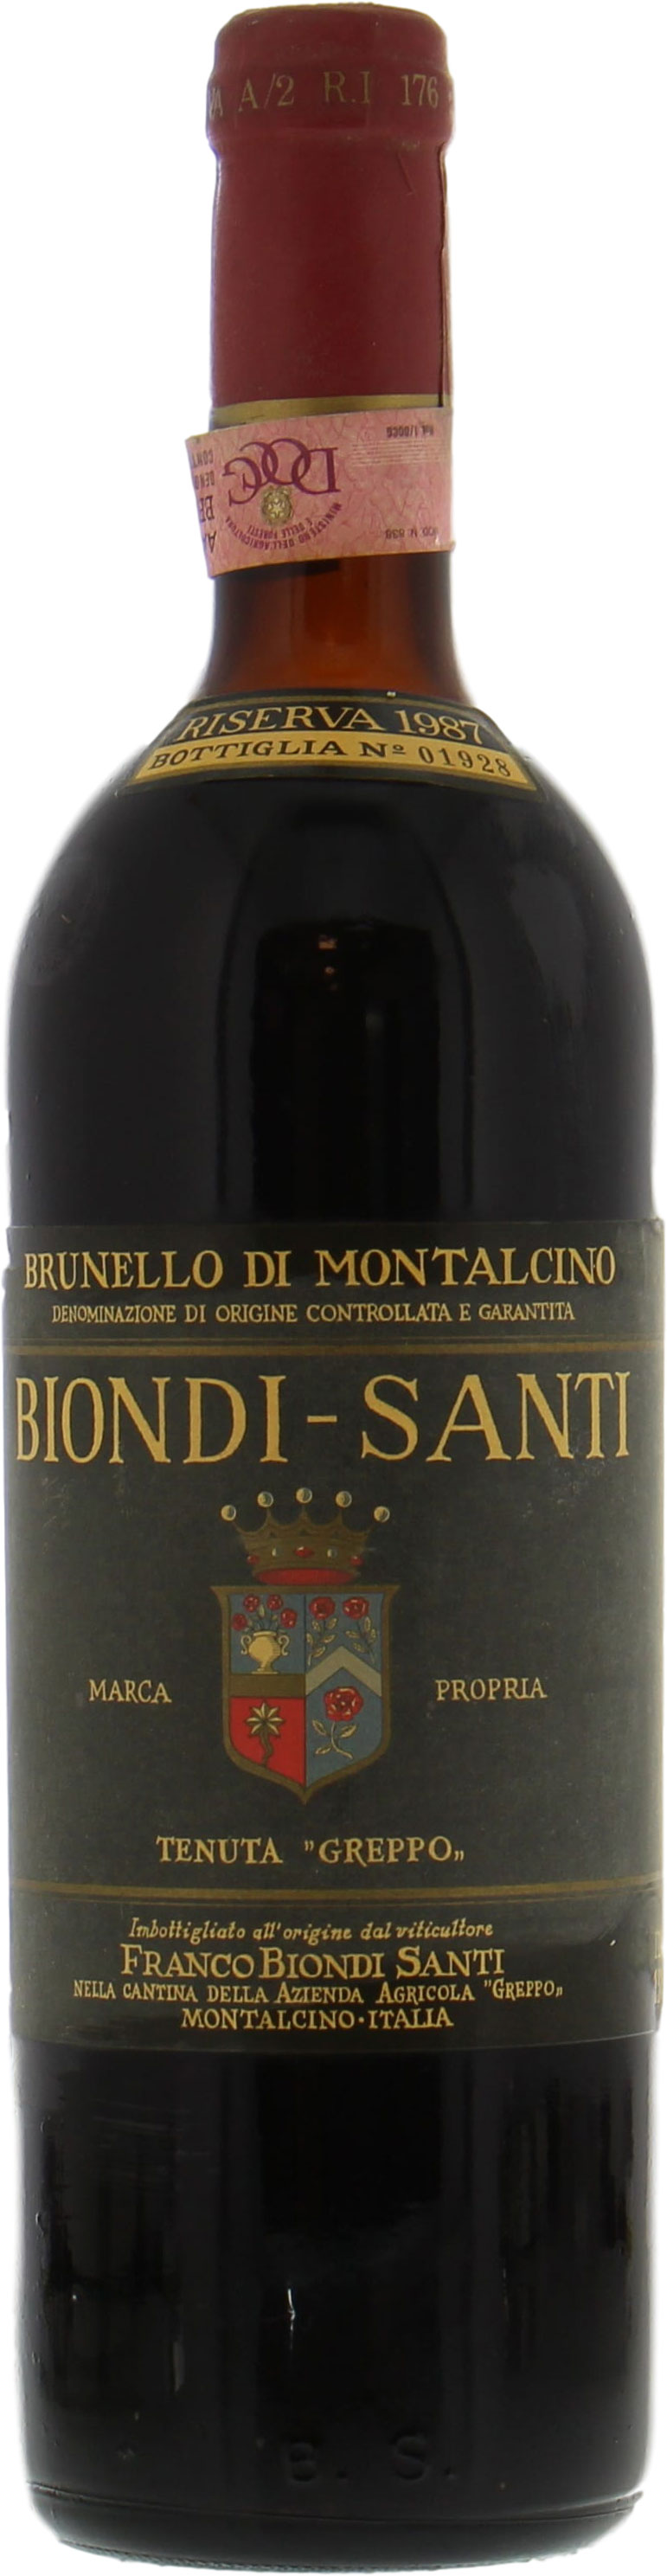 Biondi Santi - Brunello Riserva Greppo 1987